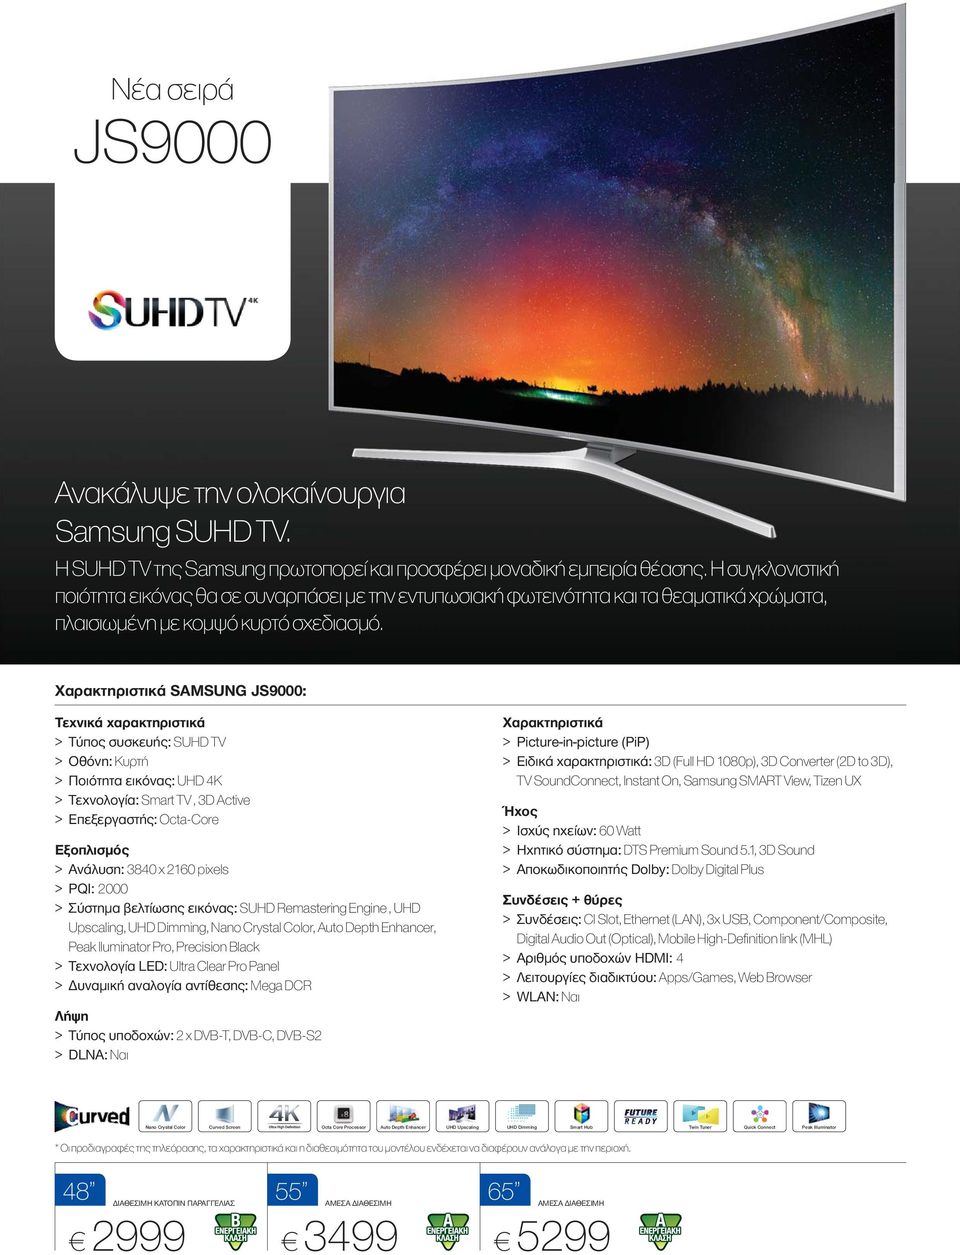 SAMSUNG JS9000: > Τύπος συσκευής: SUHD TV > Τεχνολογία: Smart TV, 3D Active > Επεξεργαστής: Octa-Core > PQI: 2000 > Σύστημα βελτίωσης εικόνας: SUHD Remastering Engine, UHD Upscaling,,,, Peak